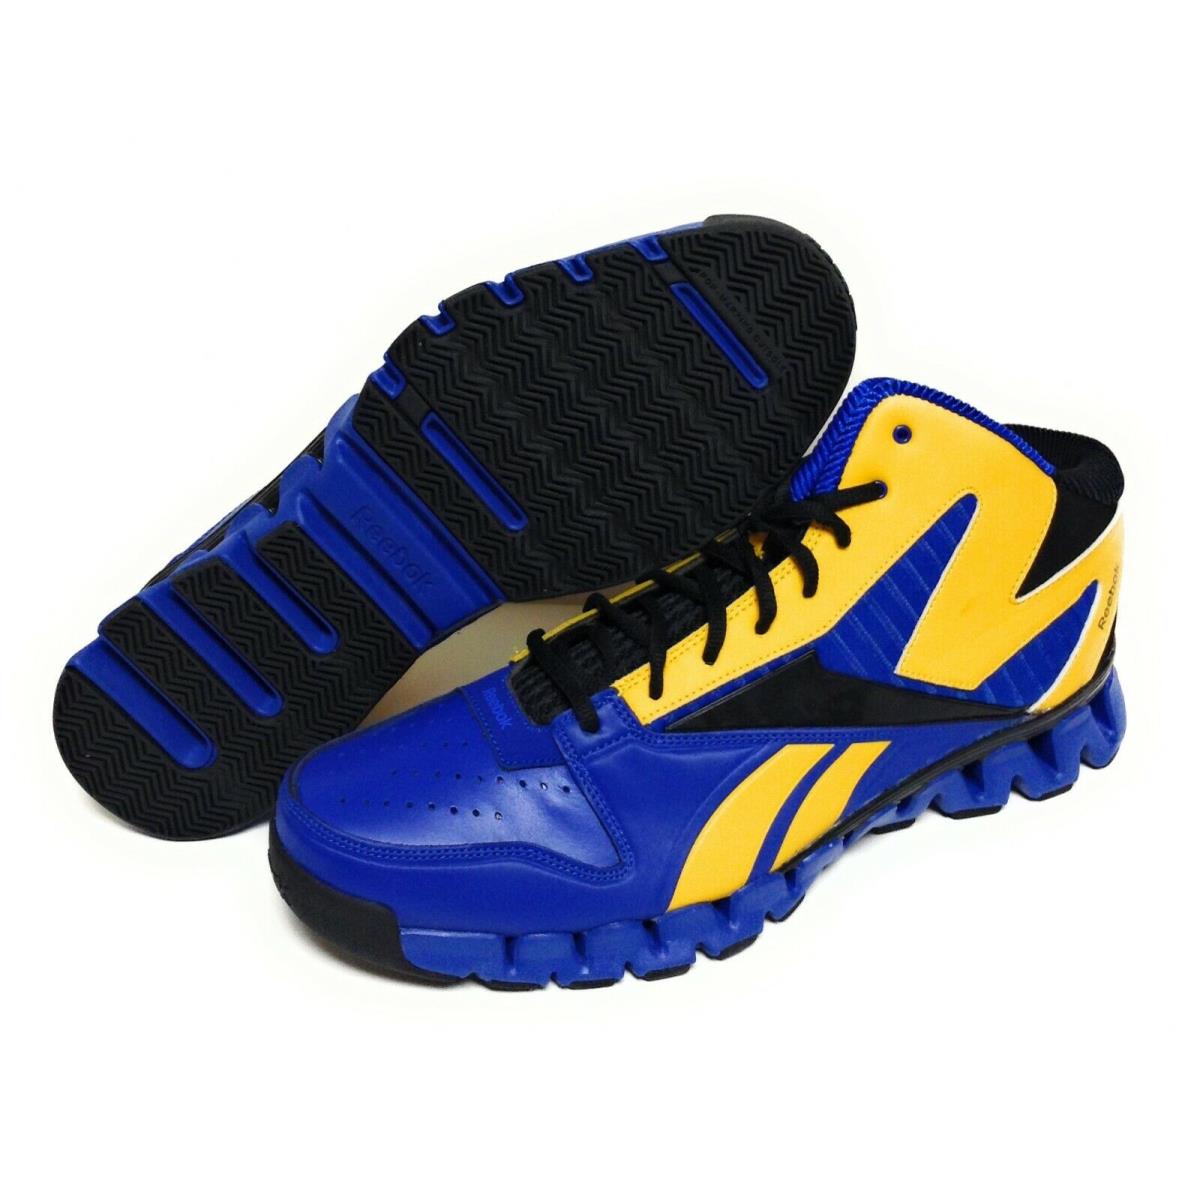 Mens Reebok Zig Nano Pro Fury V44519 Blue Sample Basketball Sneakers Shoes - Blue , Royal Blue Manufacturer